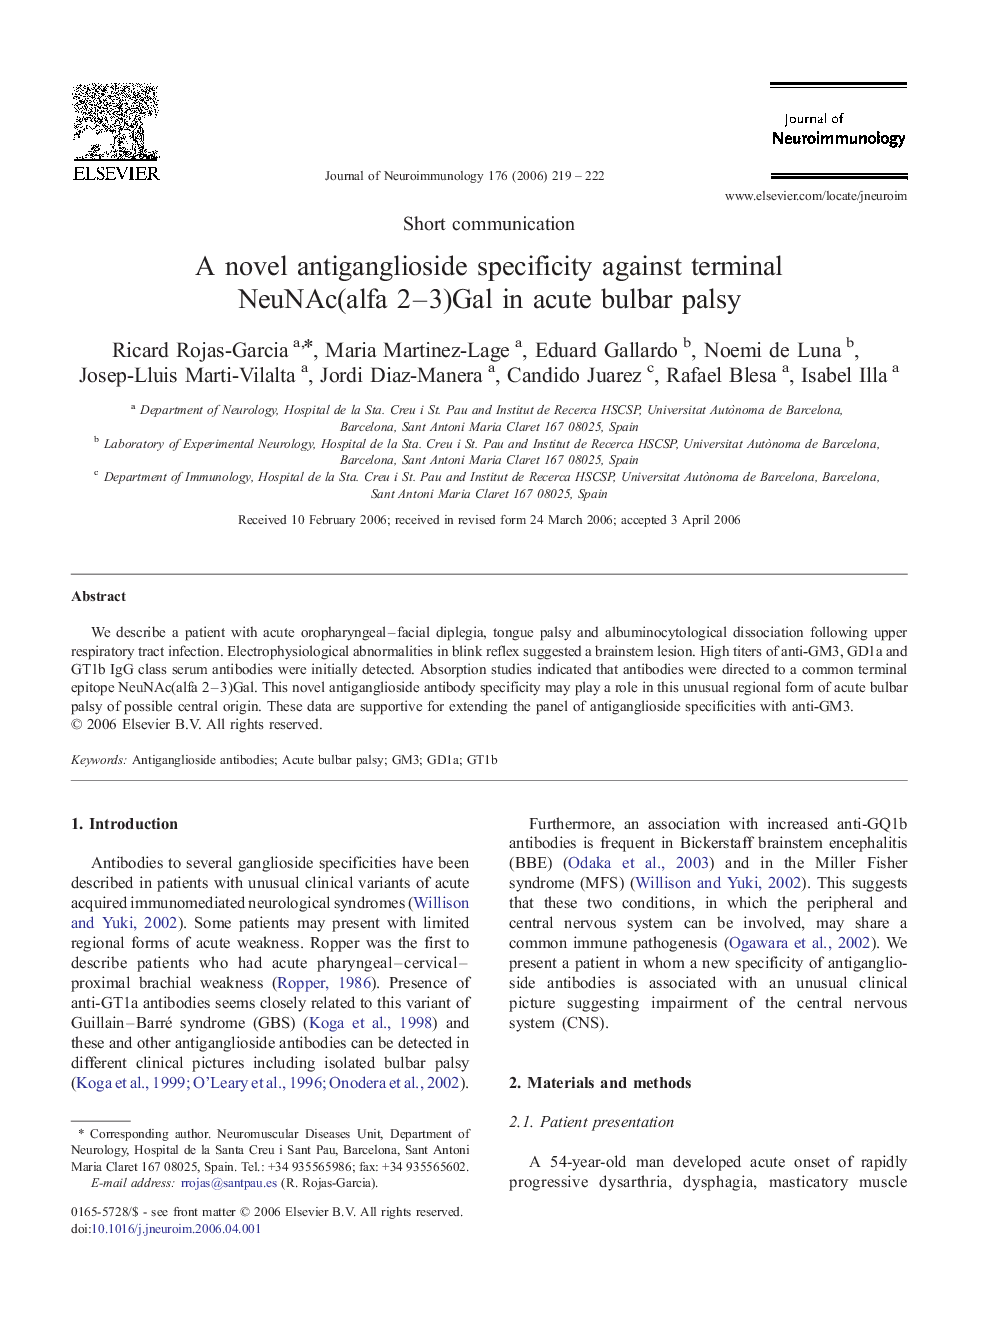 A novel antiganglioside specificity against terminal NeuNAc(alfa 2–3)Gal in acute bulbar palsy